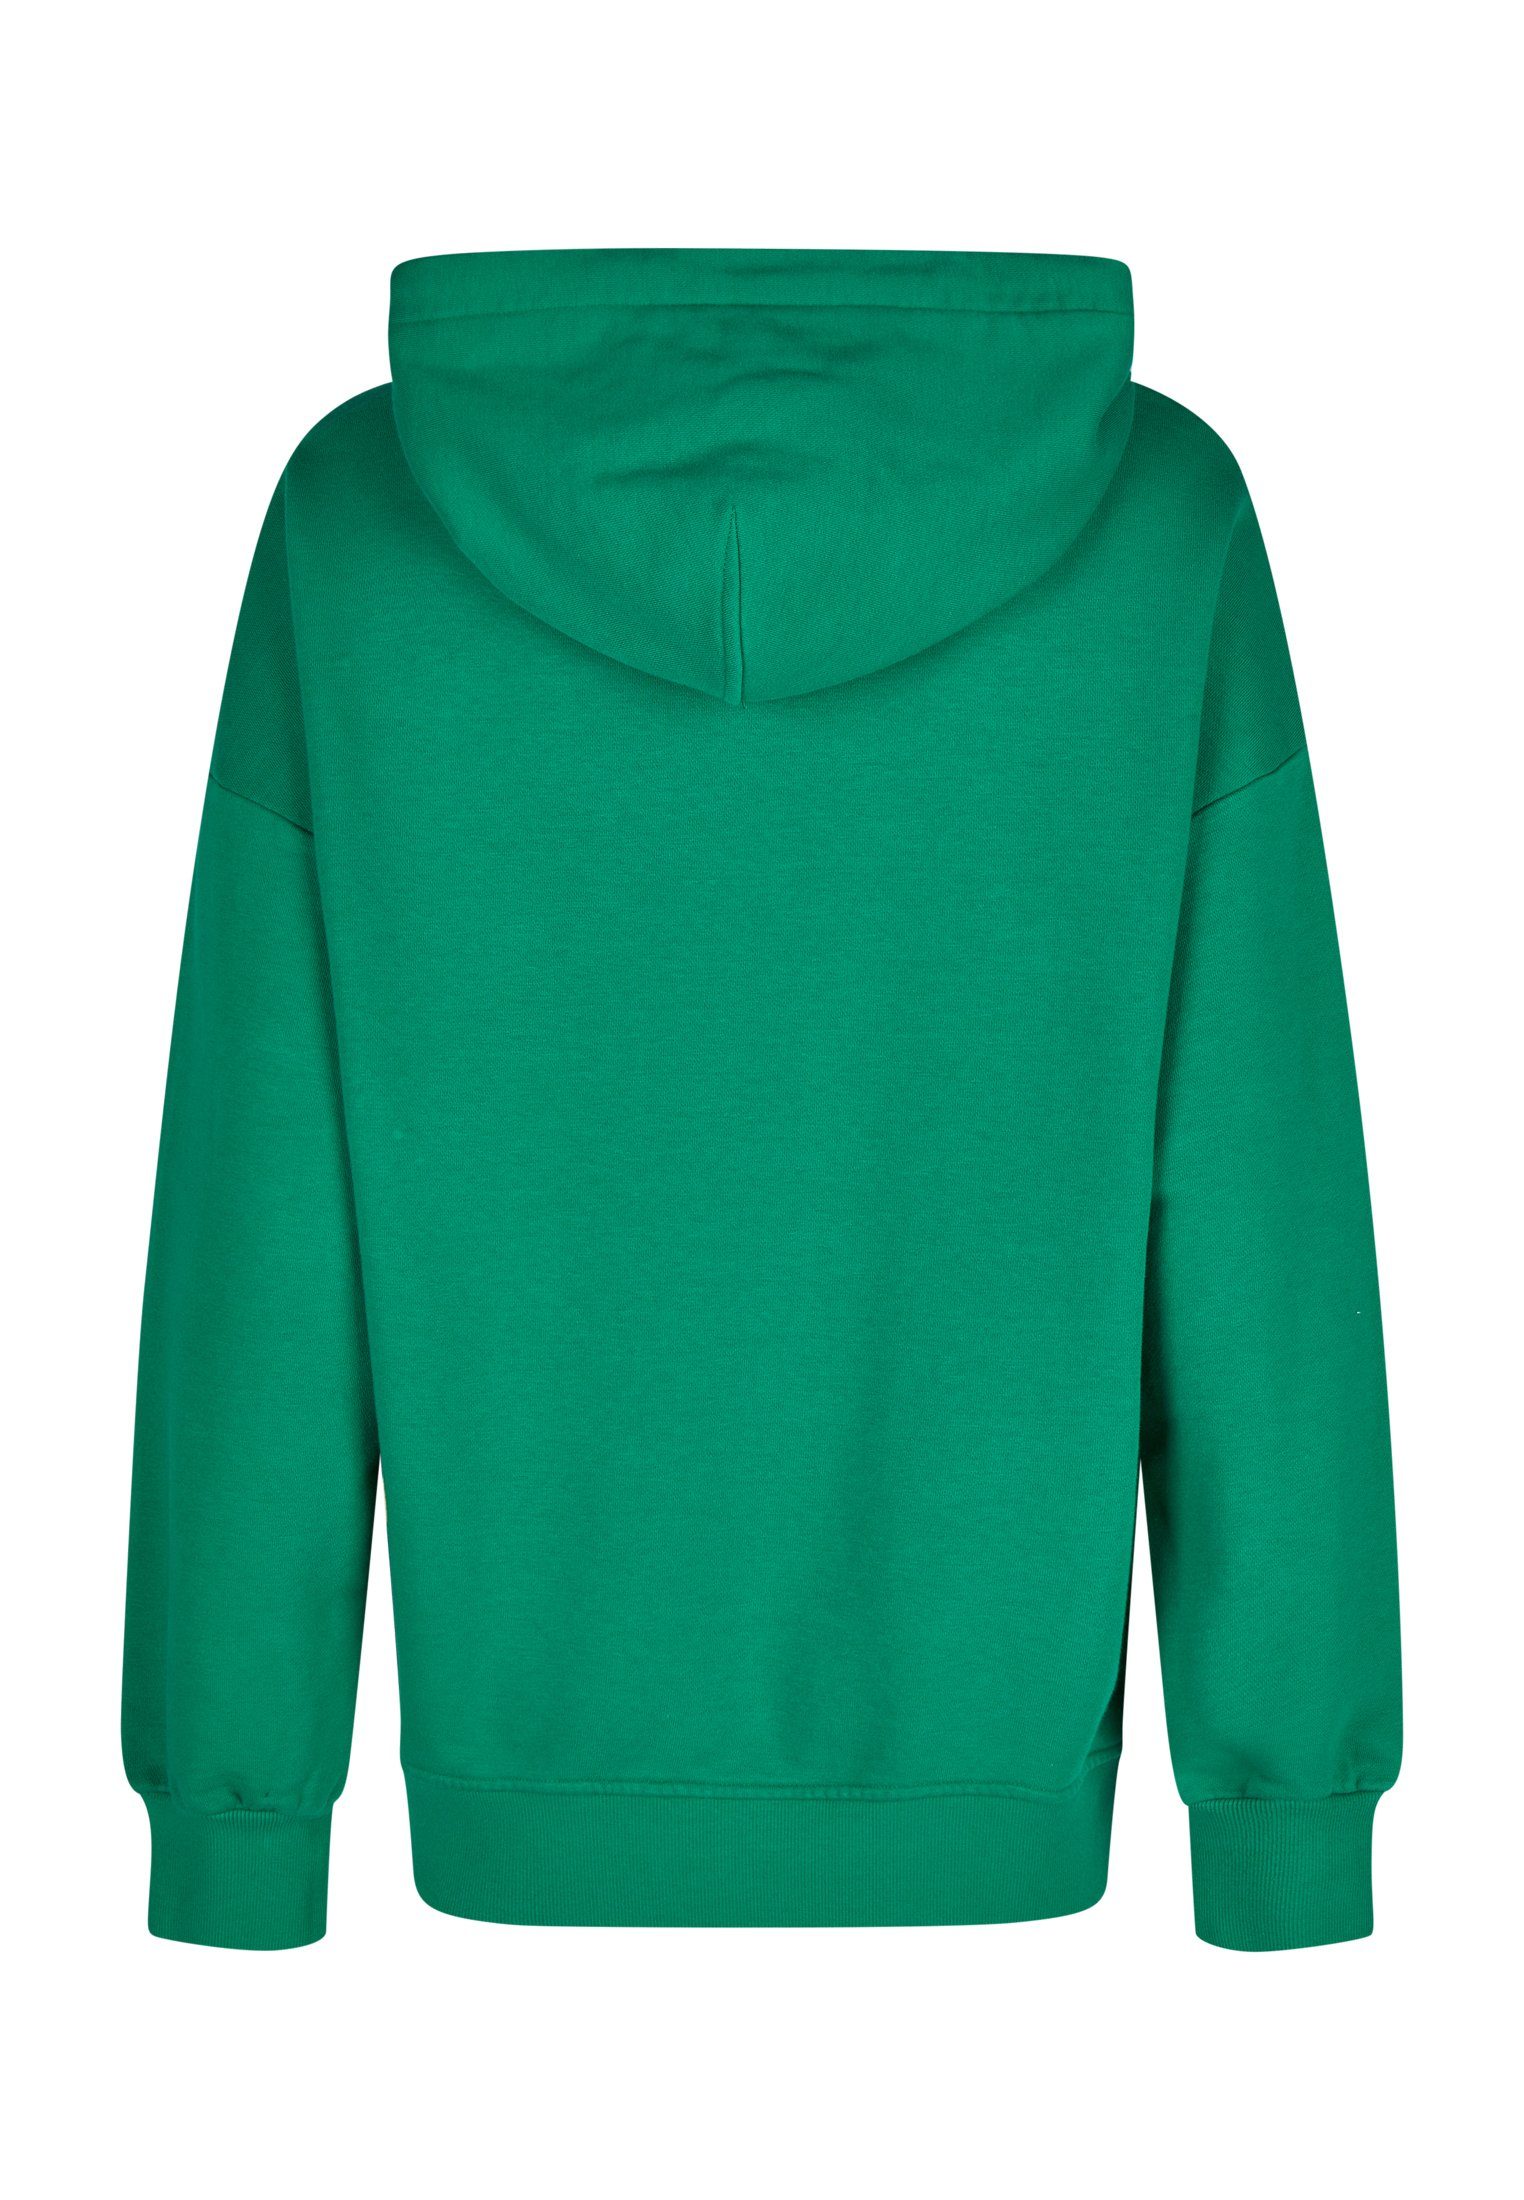 MARC AUREL Sweatshirt mit Print Going" "Keep green varied